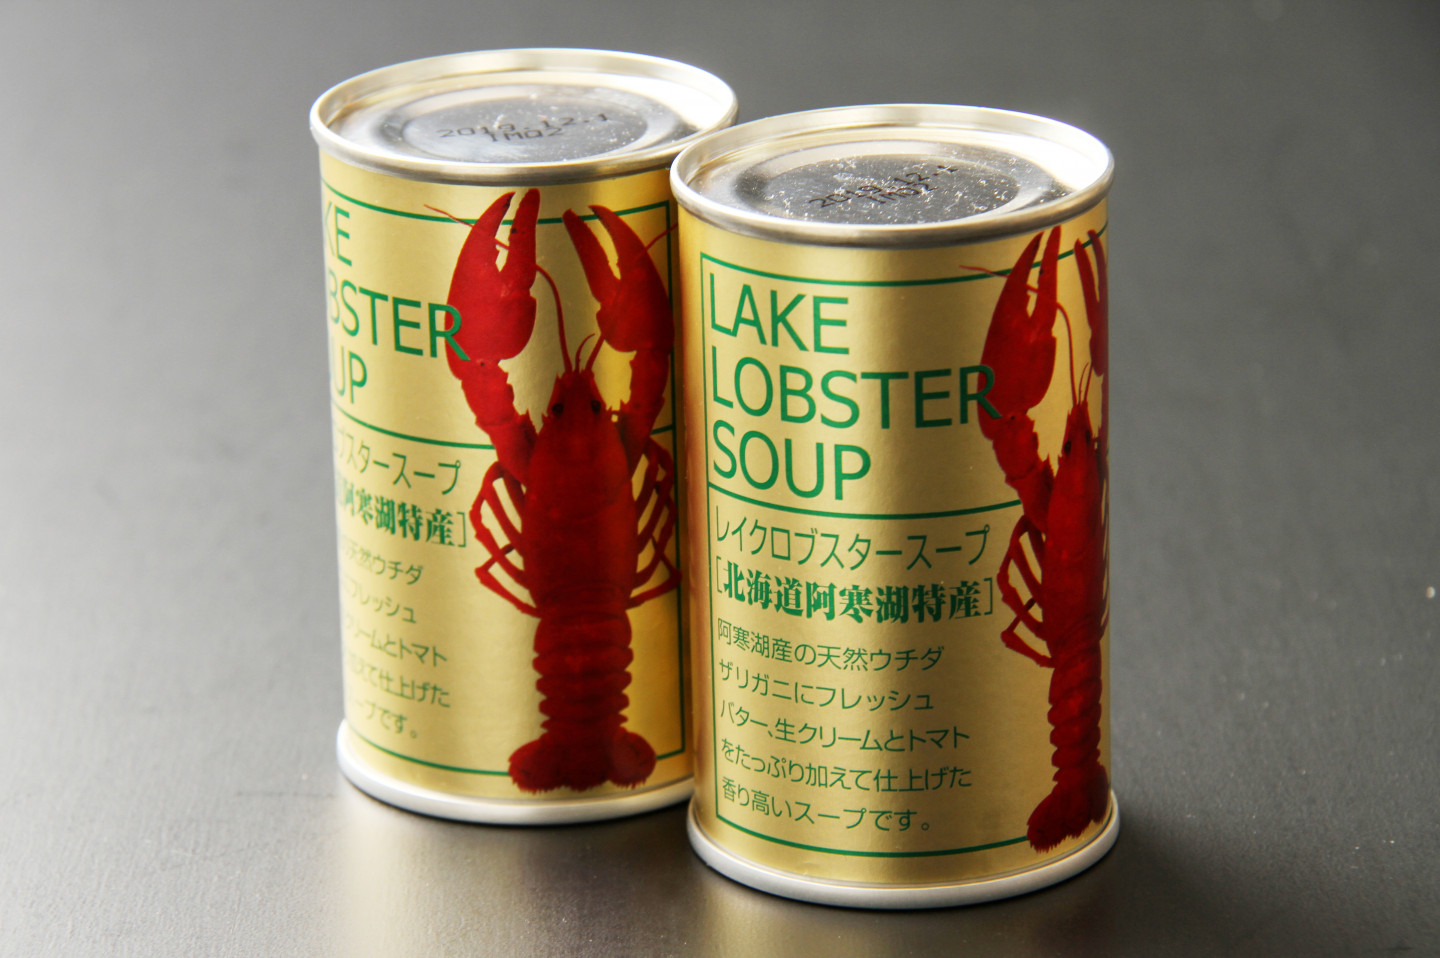 Lake Lobster Soup